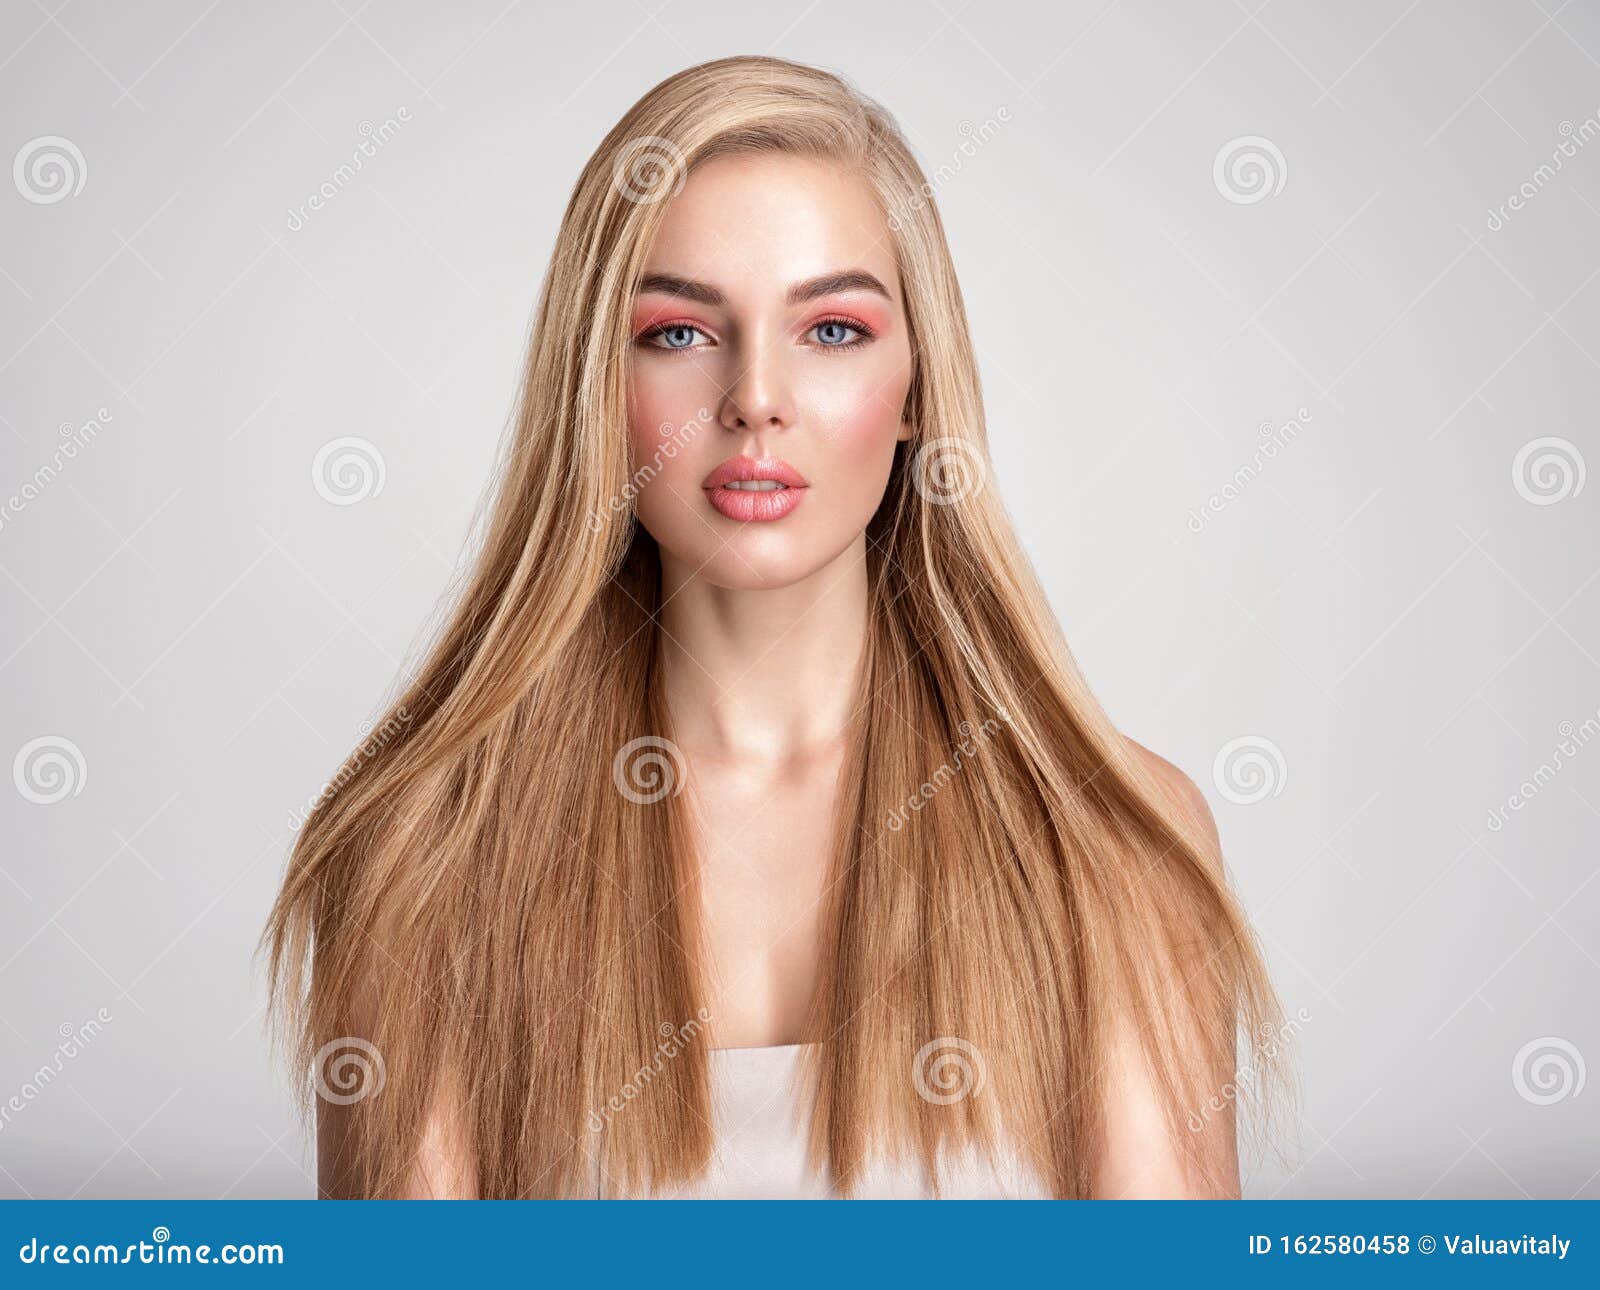 Straight Hair Blonde Highlights - wide 7